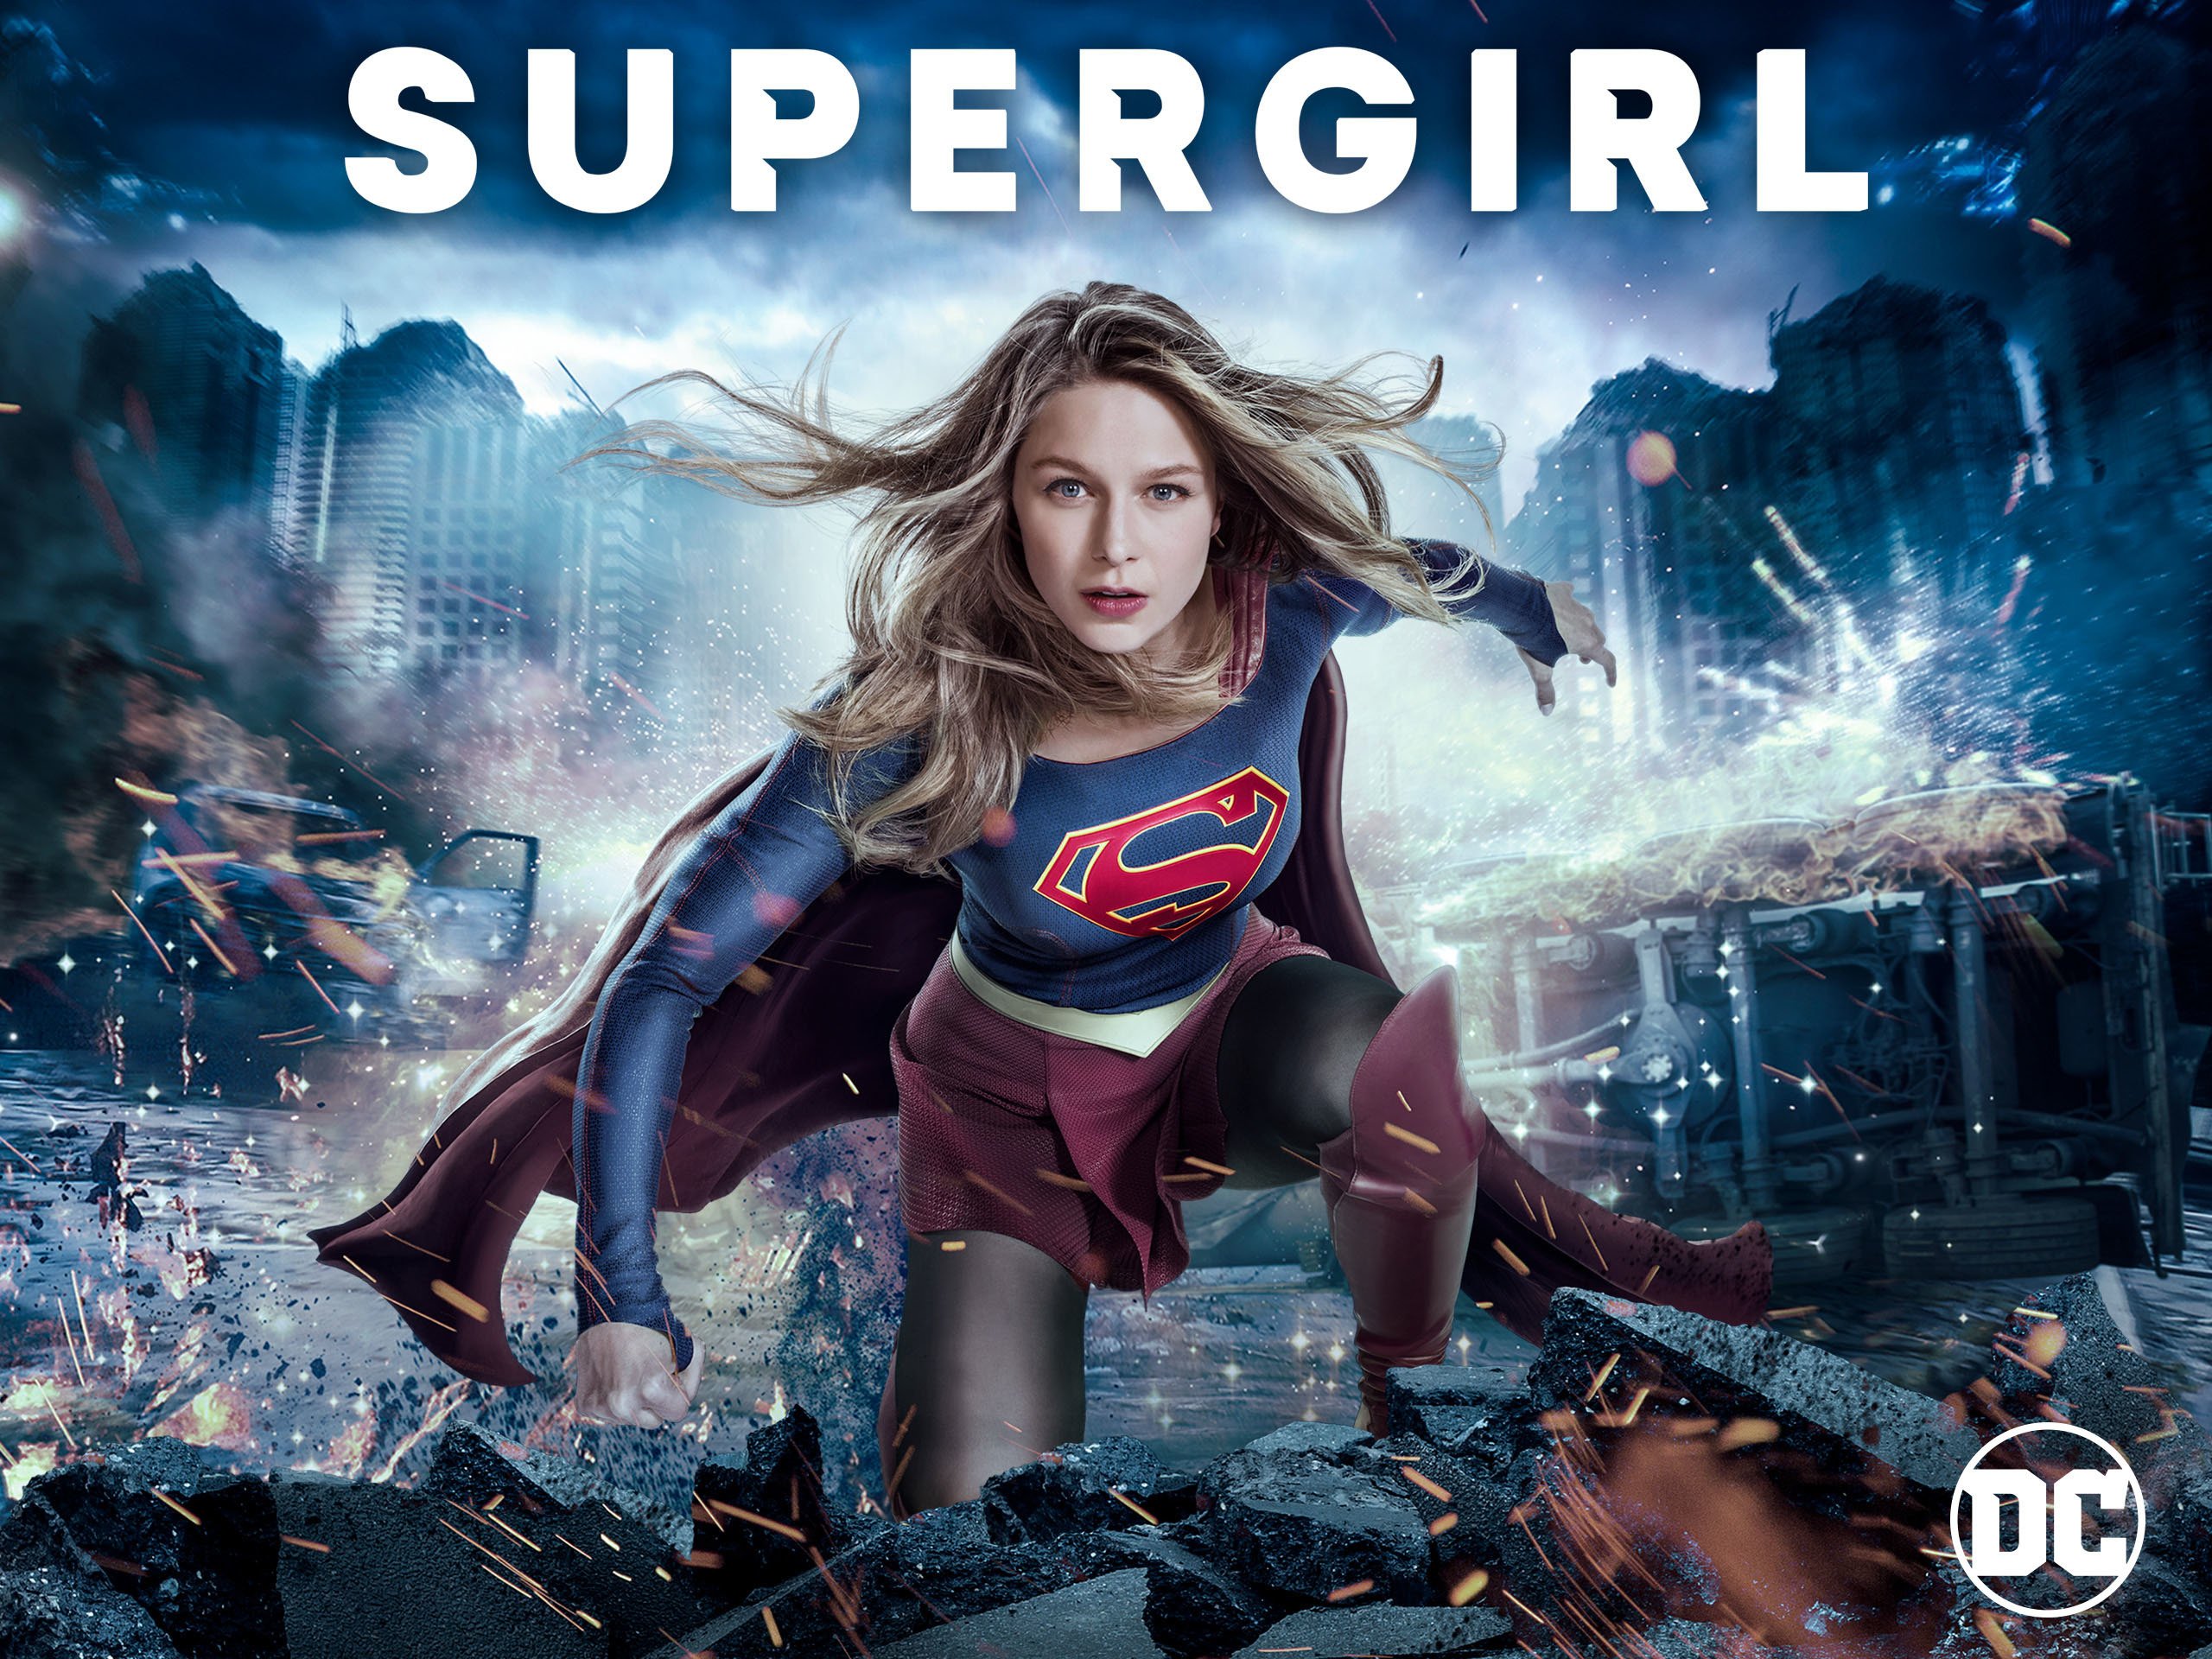 Supergirl season 3 all episodes subtitles download